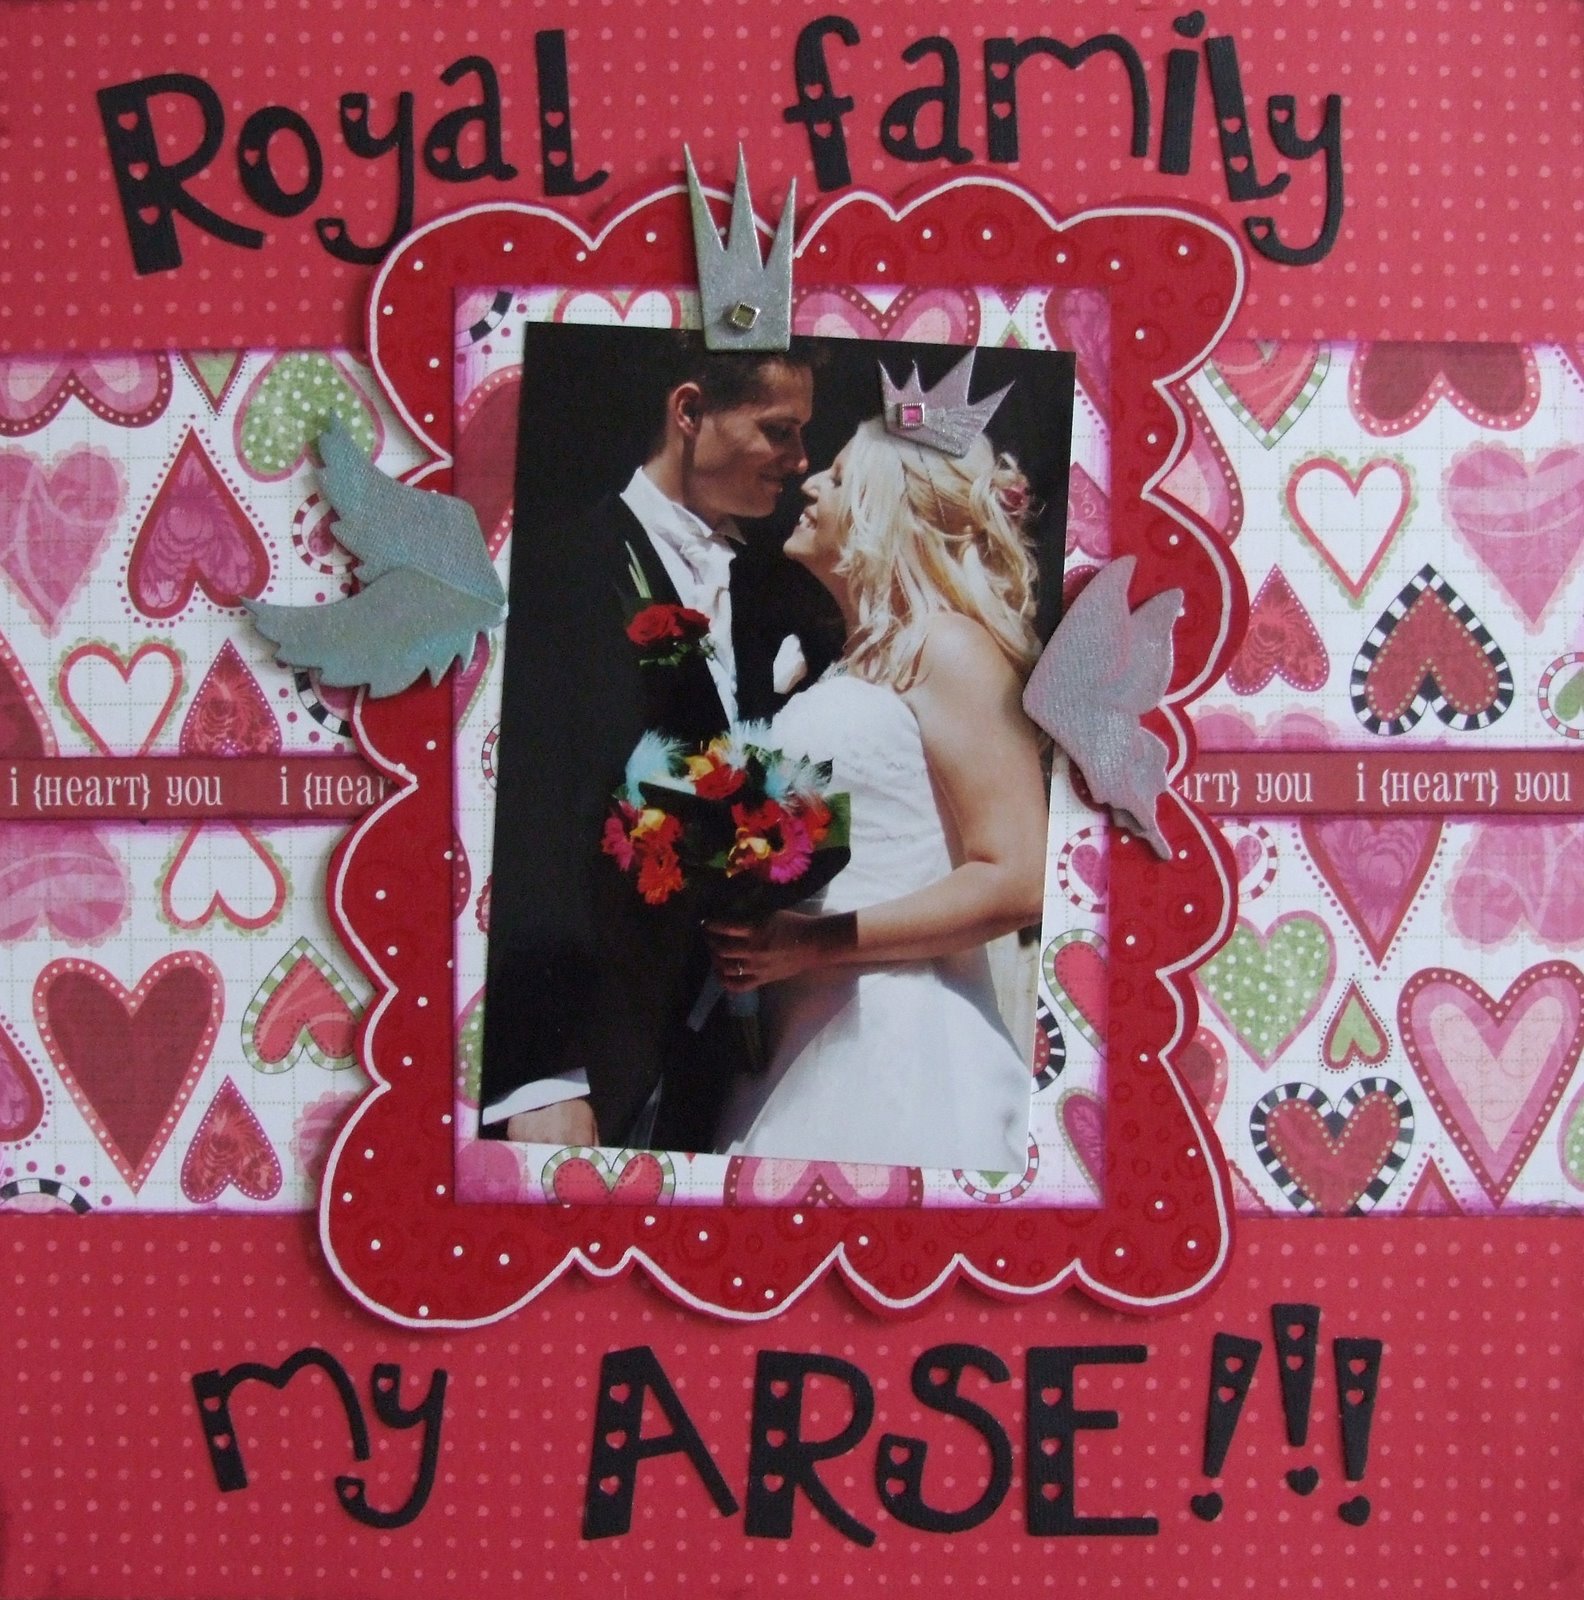 [Royal+family+my+arse.jpg]